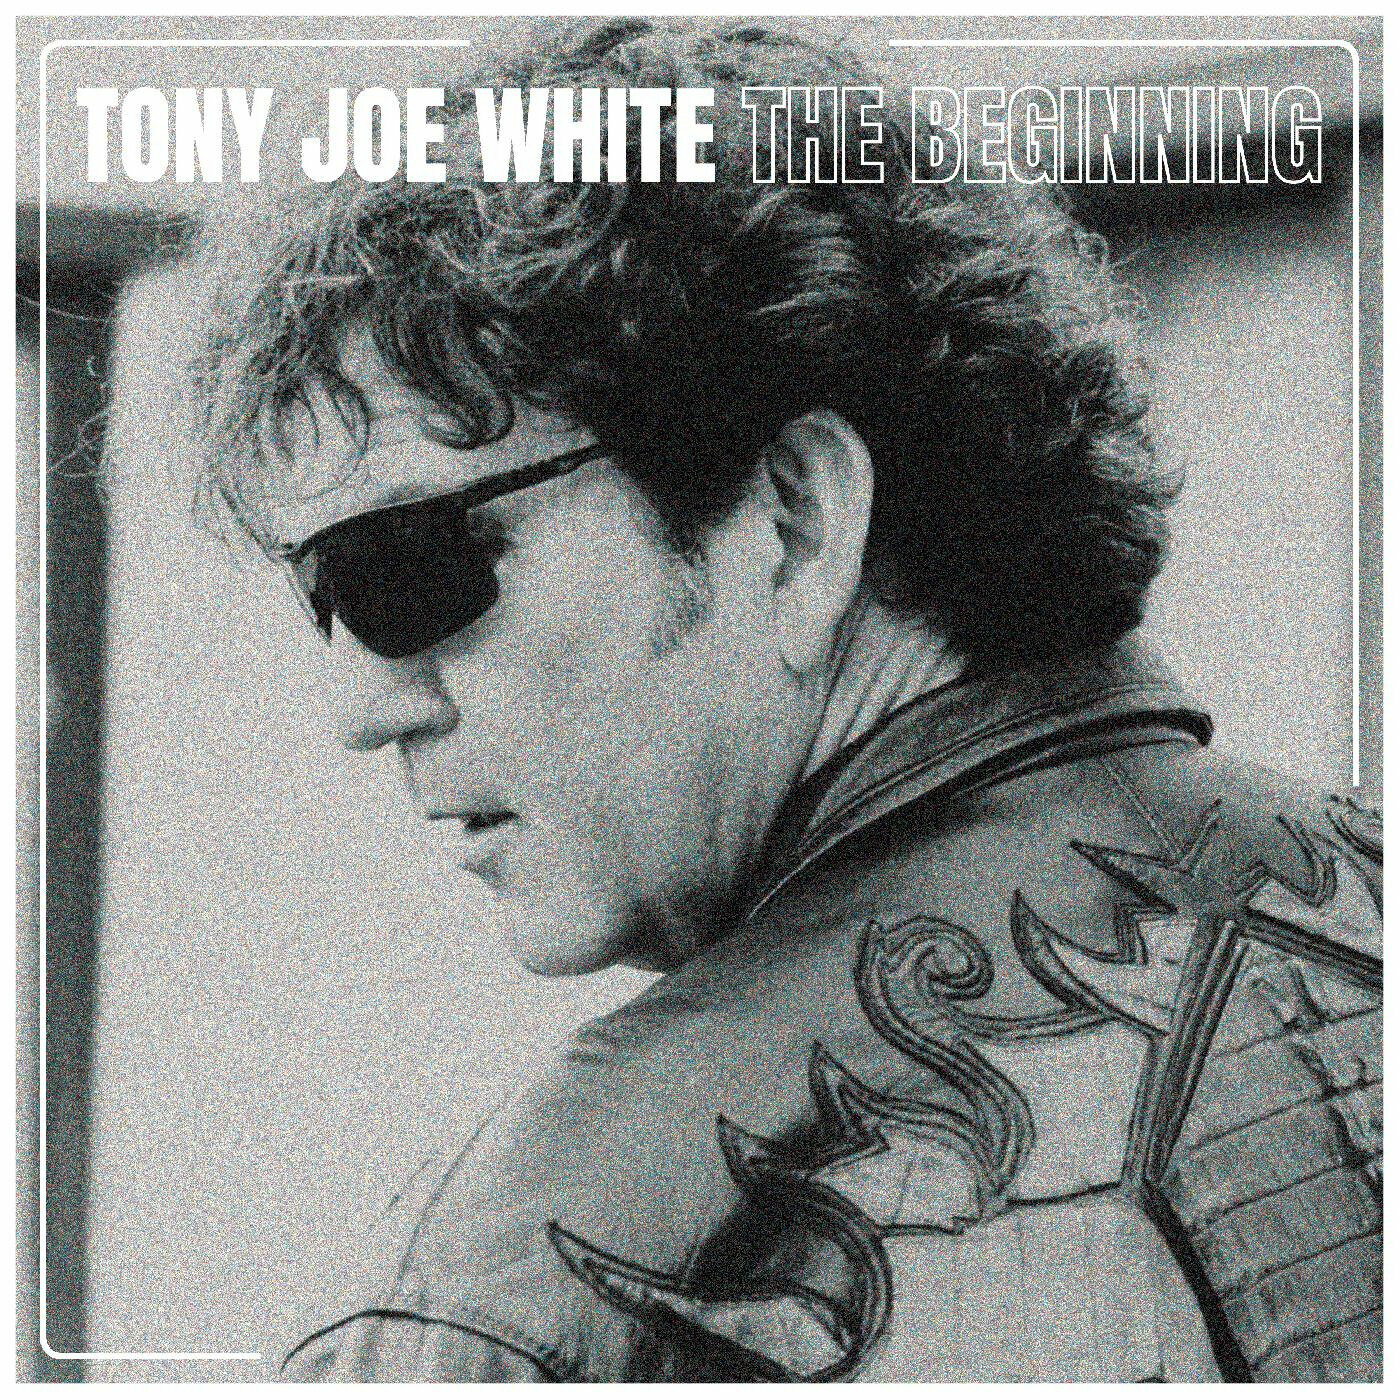 Vinyl Record Tony Joe White - The Beginning (LP)